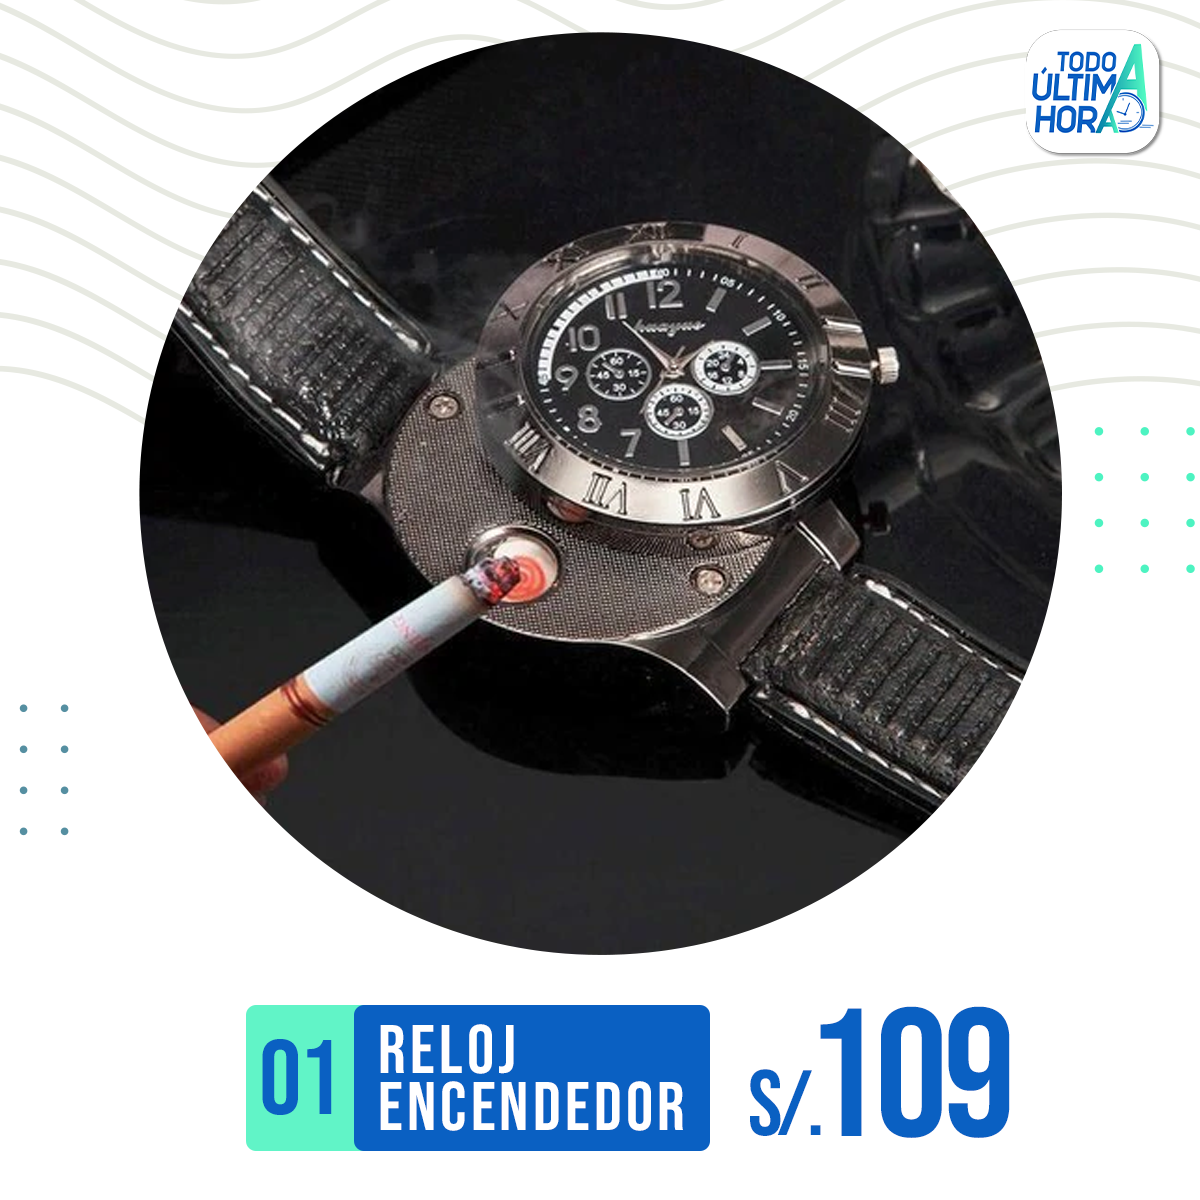 Reloj Encendedor Premium ⌚ TodoAUltimaHora